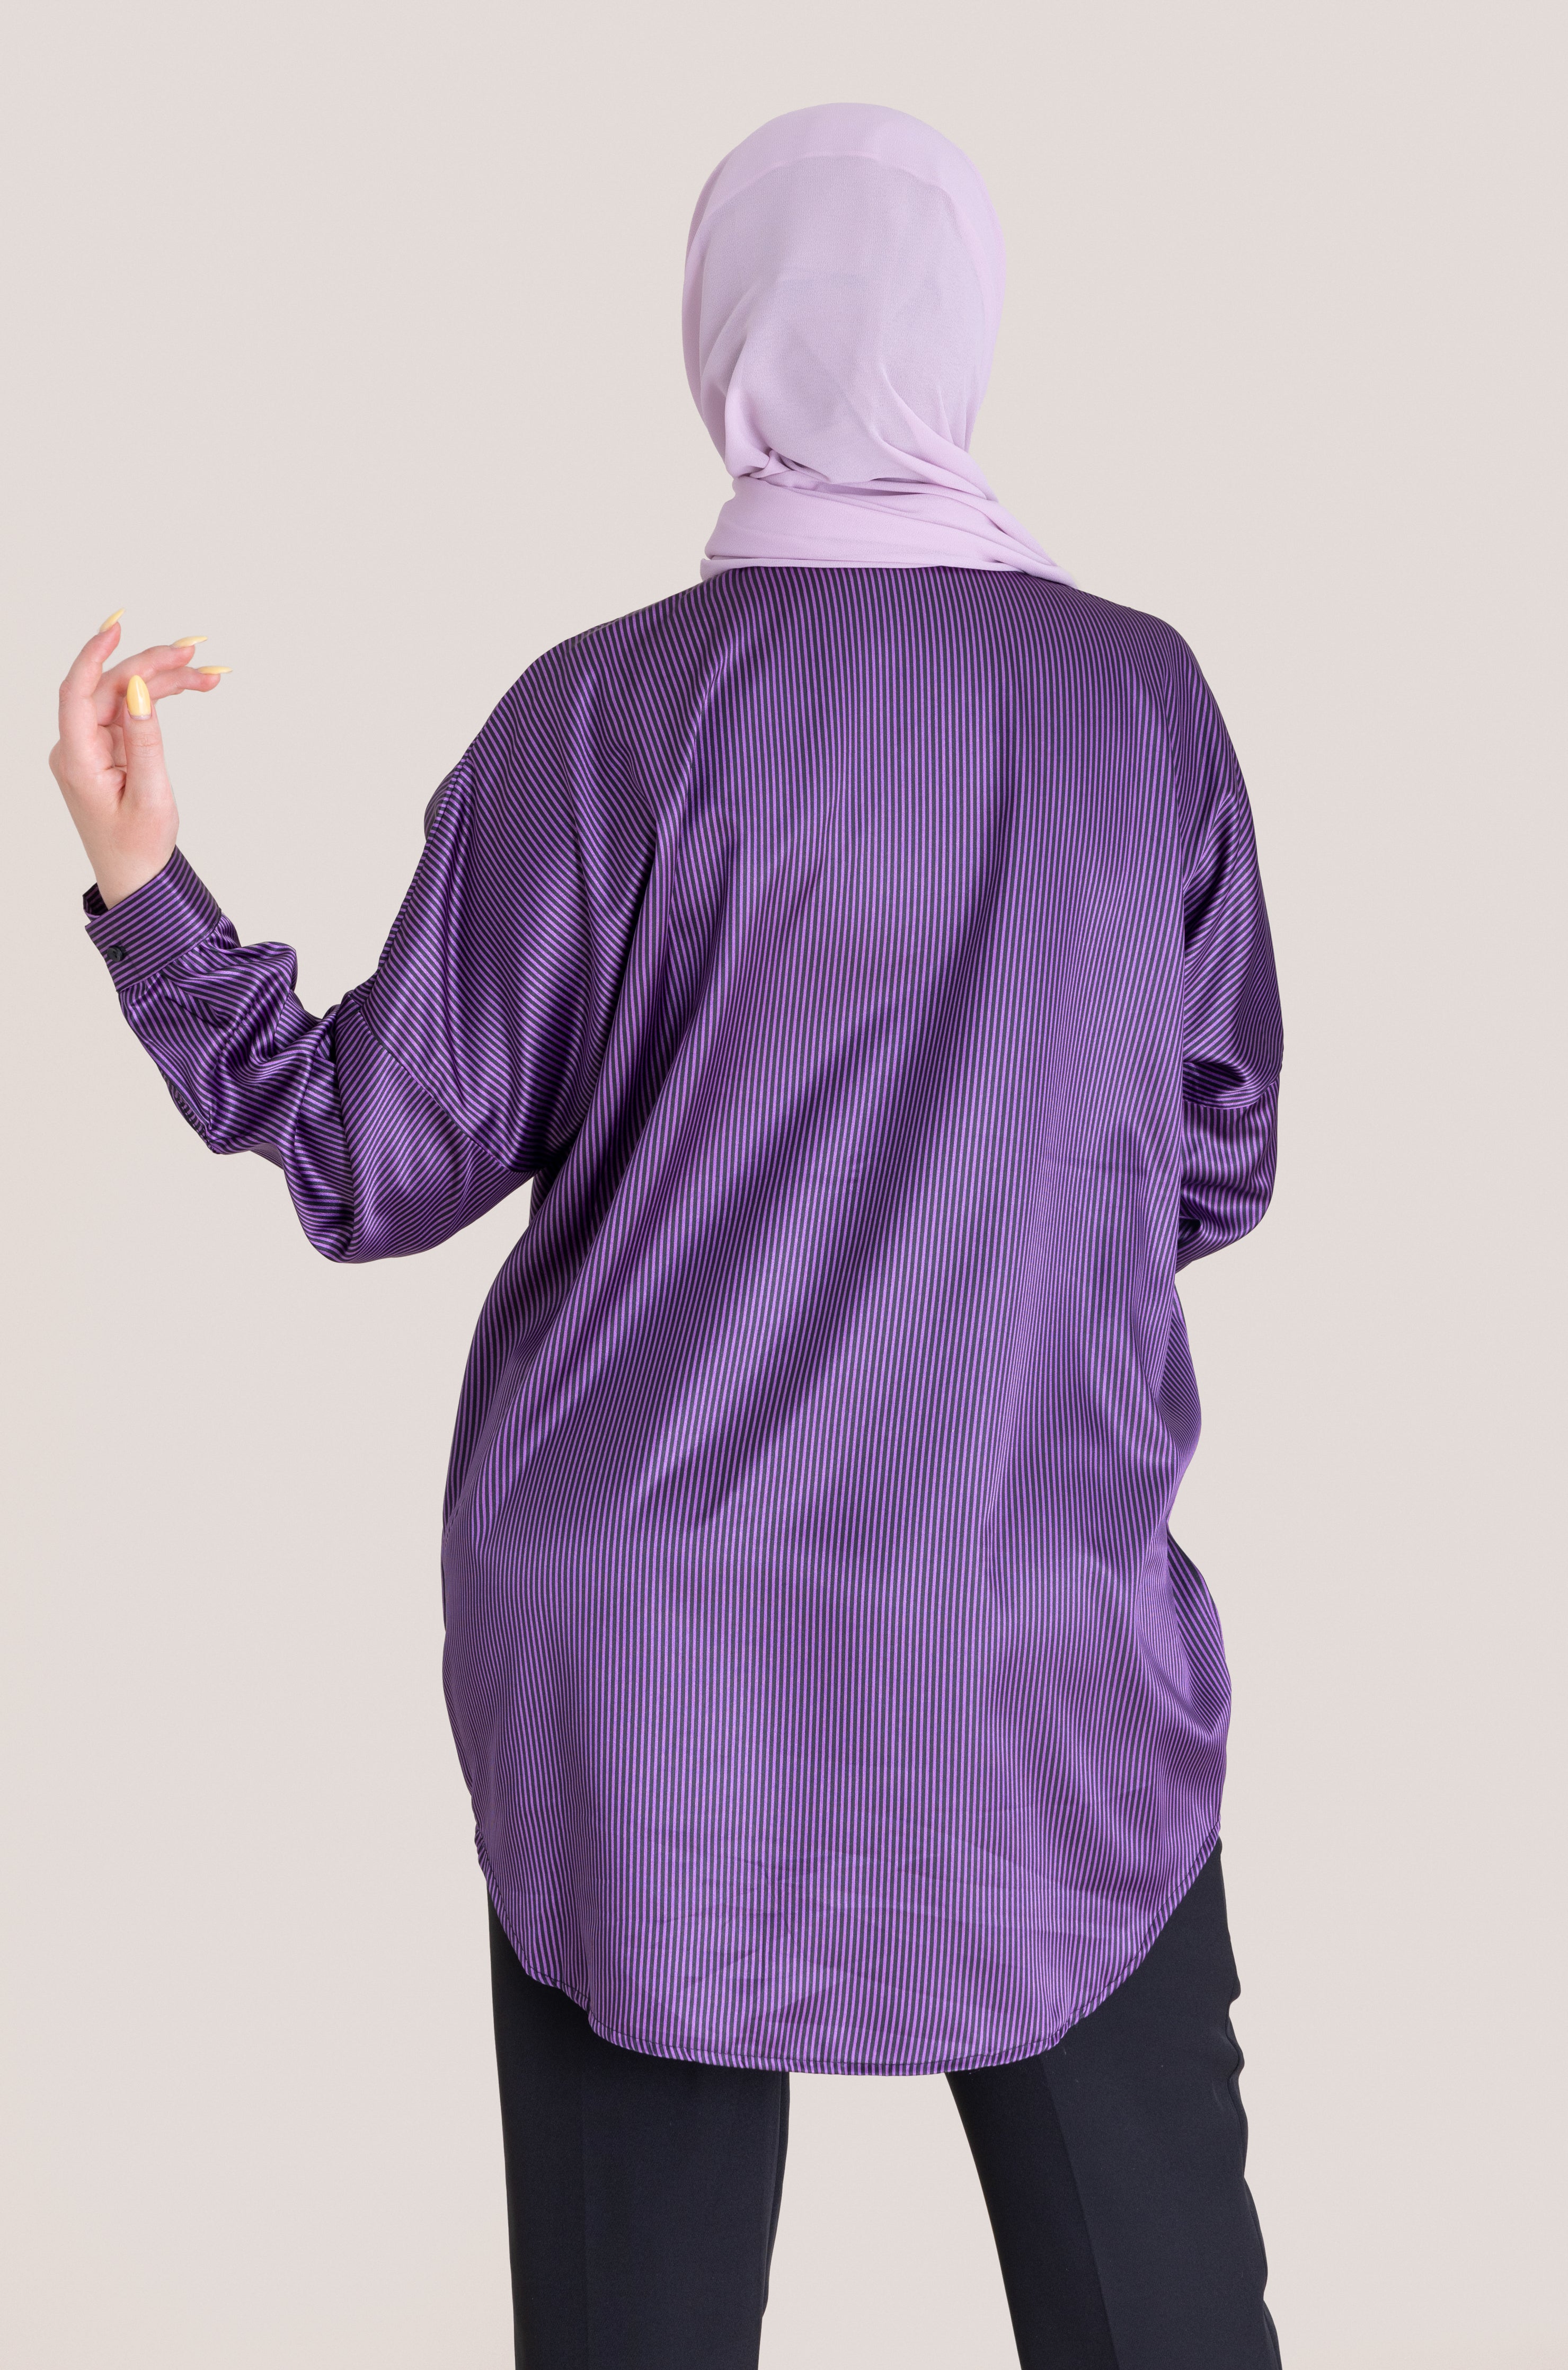 Crystal Embellished Print Loose Fit Top - Purple